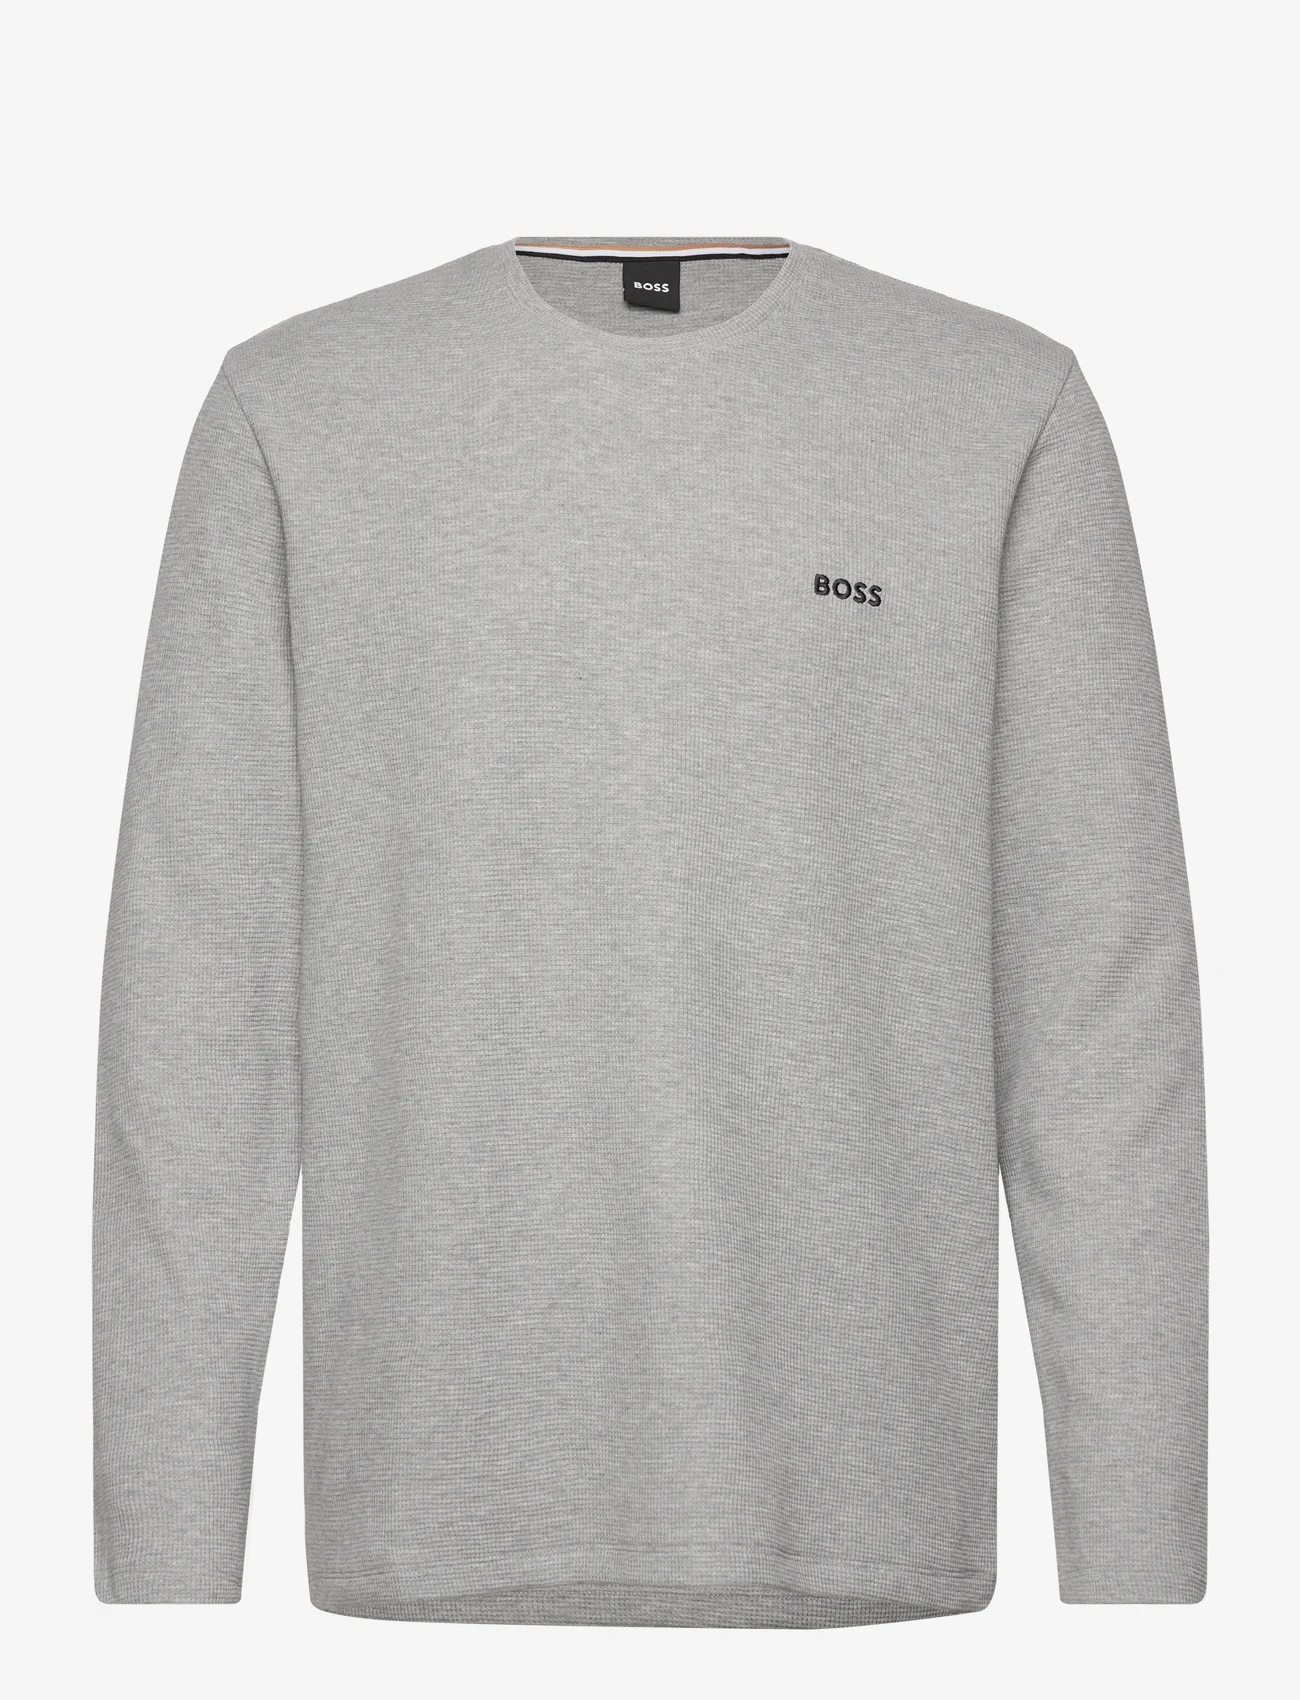 BOSS - Waffle LS-Shirt - pyjamaoberteil - medium grey - 0